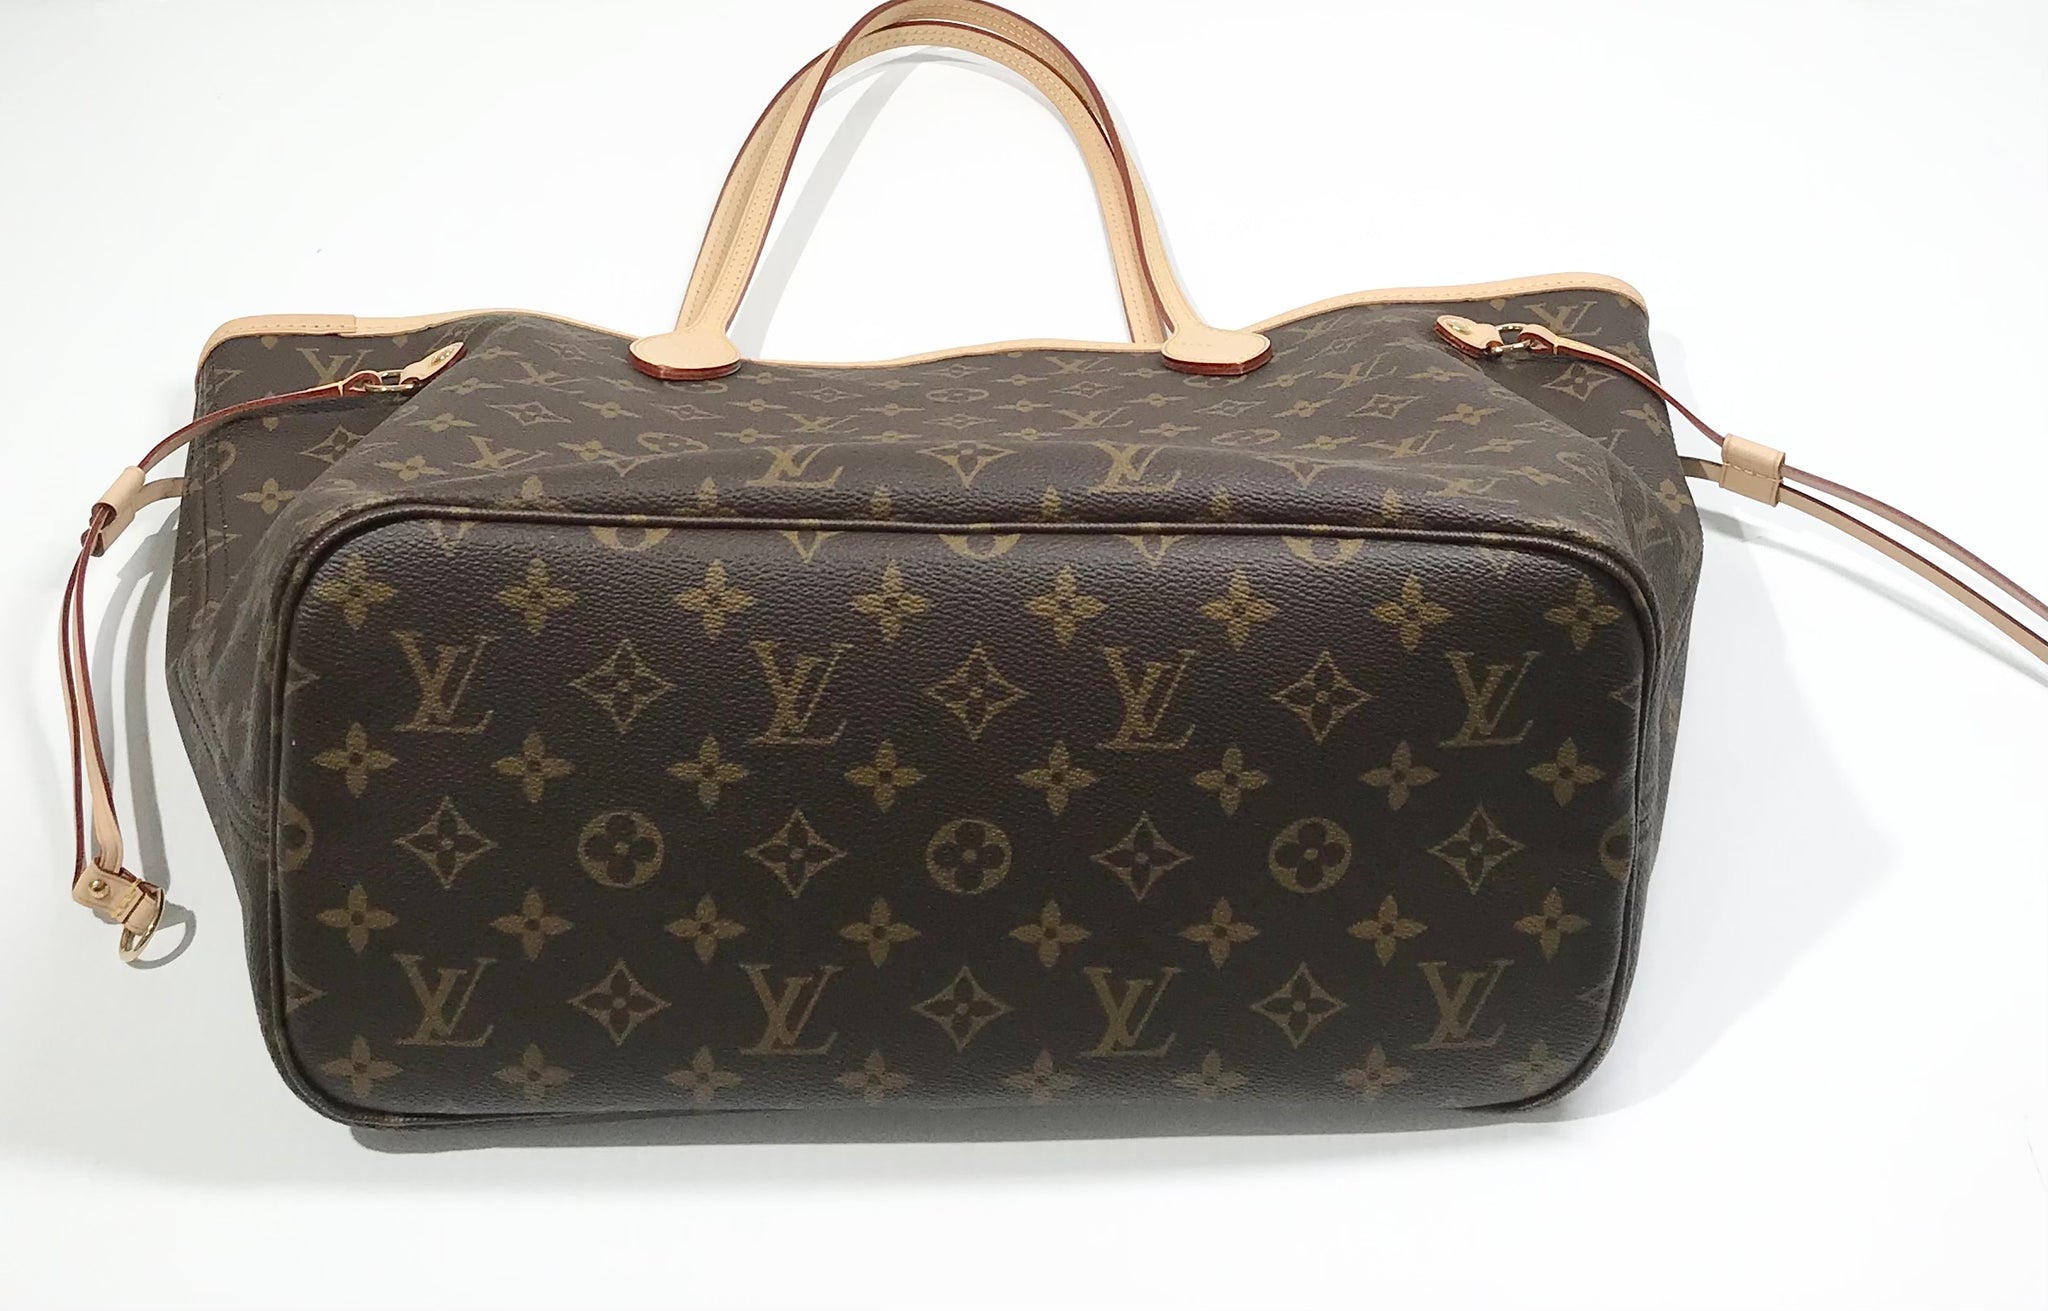 Authentic Louis Vuitton Neverfull MM Monogram Bag - Body Logic